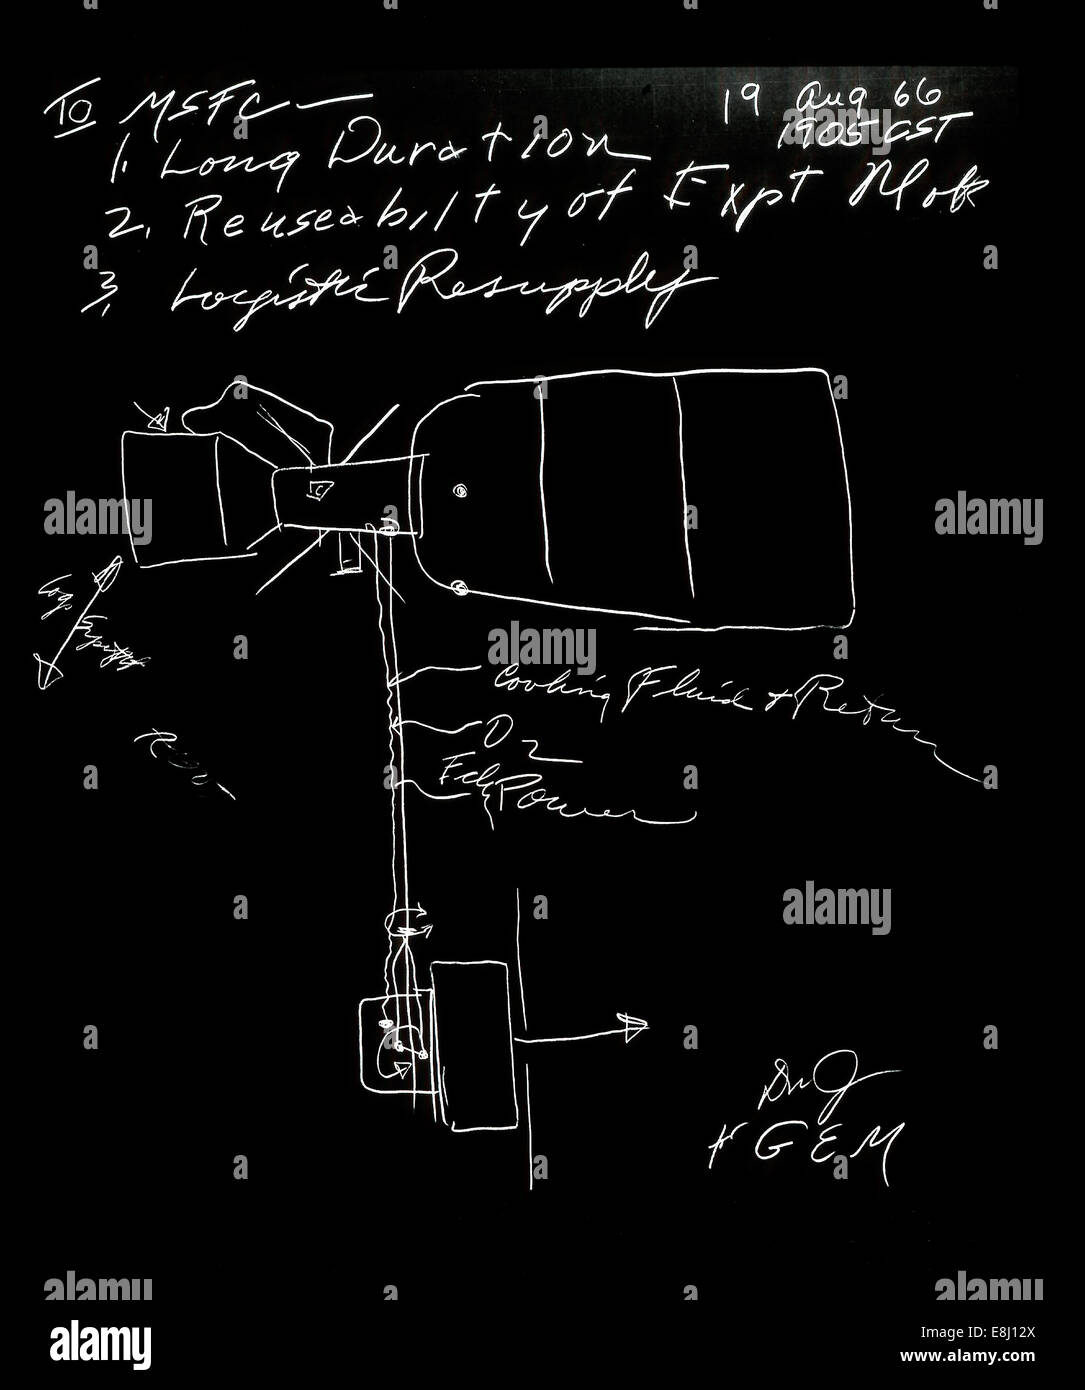 GEORGE MUELLER VERSION VON SKYLAB SKIZZE 19. AUGUST 1966. Skylab Skizze Stockfoto